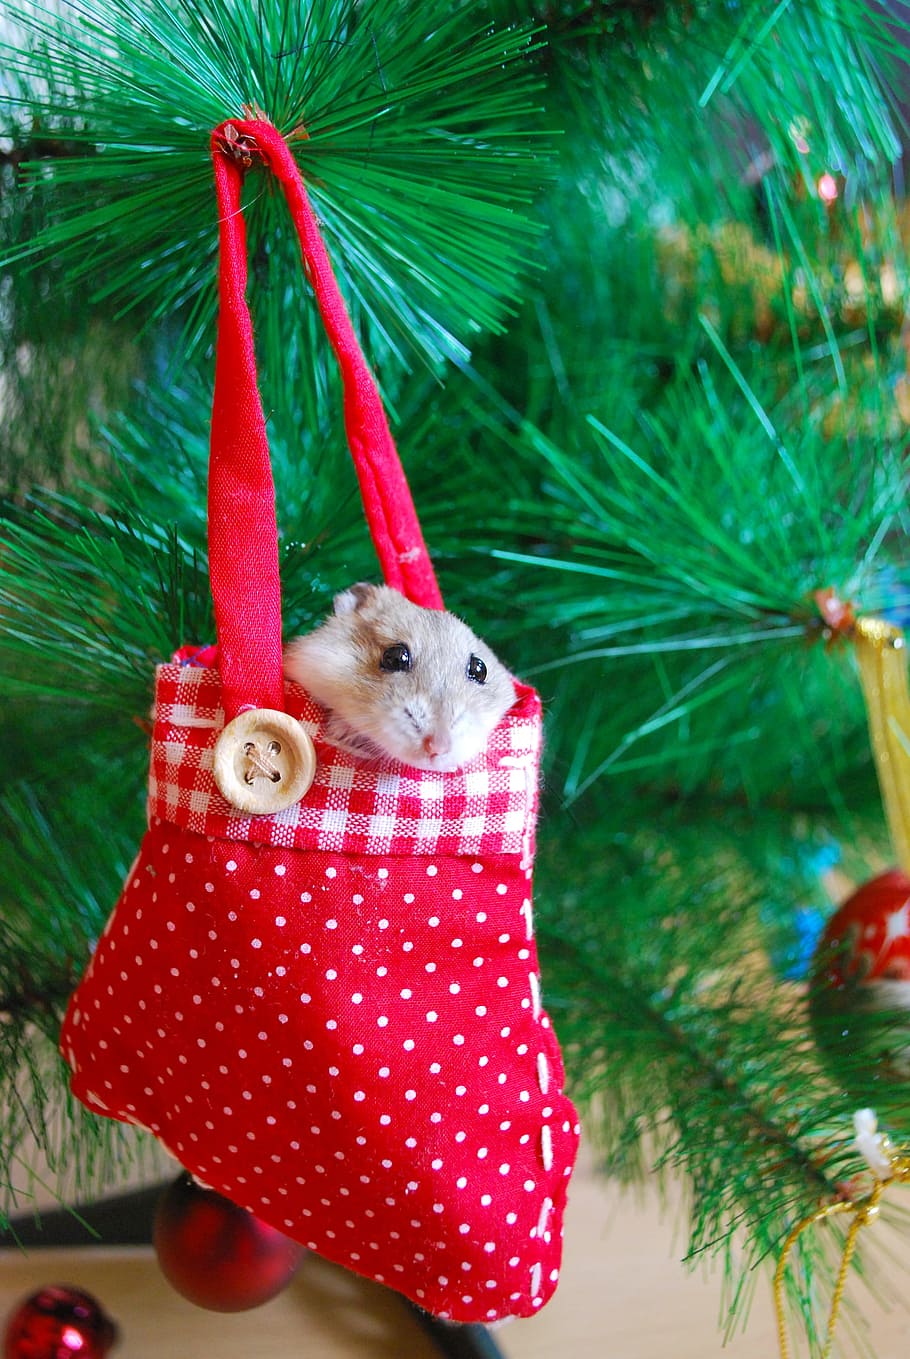 Hamster, New Year, Decoration, Alive, animal, sock, tree, one animal, christmas, animal themes